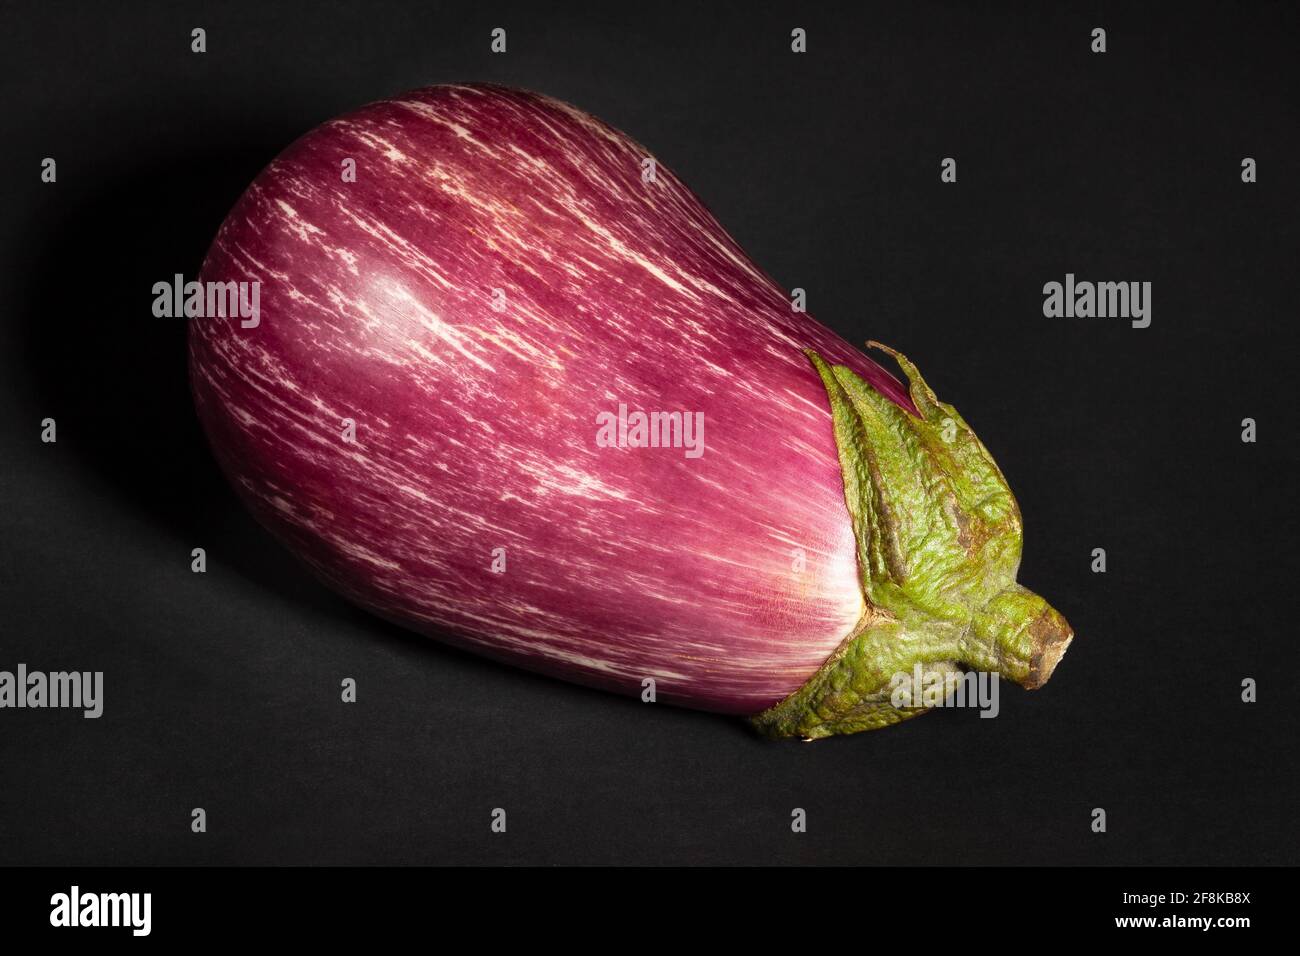 striped eggplant on black background Stock Photo